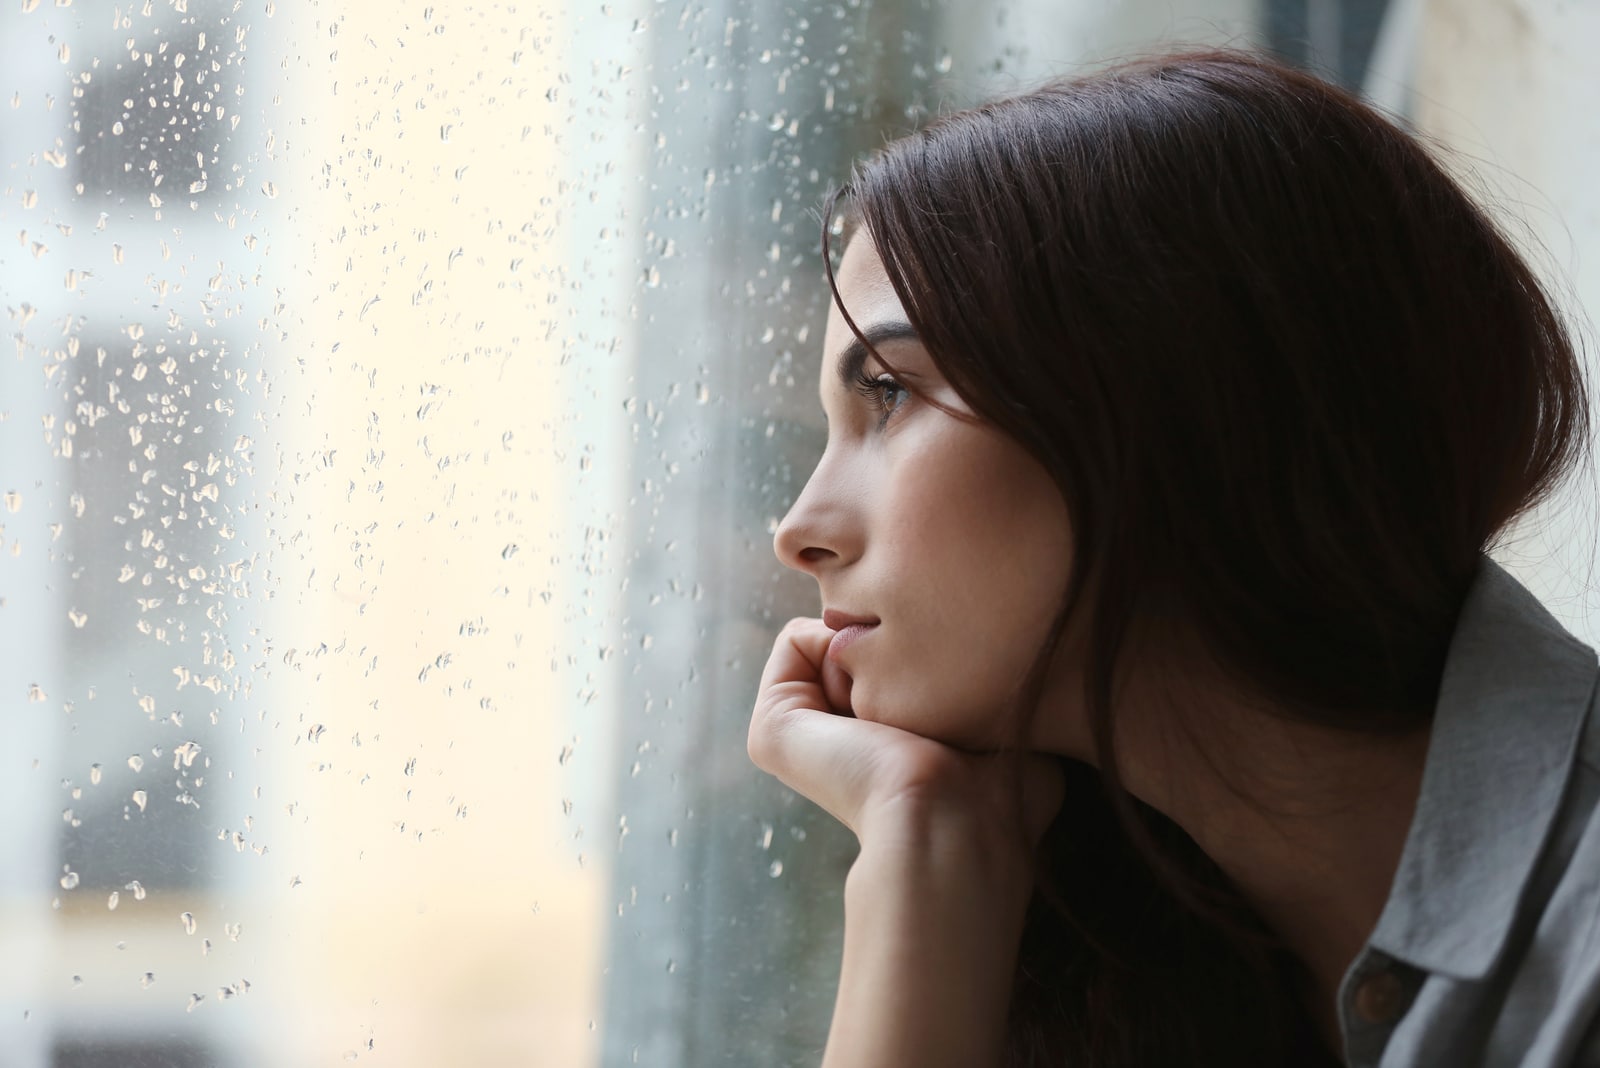 mujer triste mirando a través de una ventana lluviosa